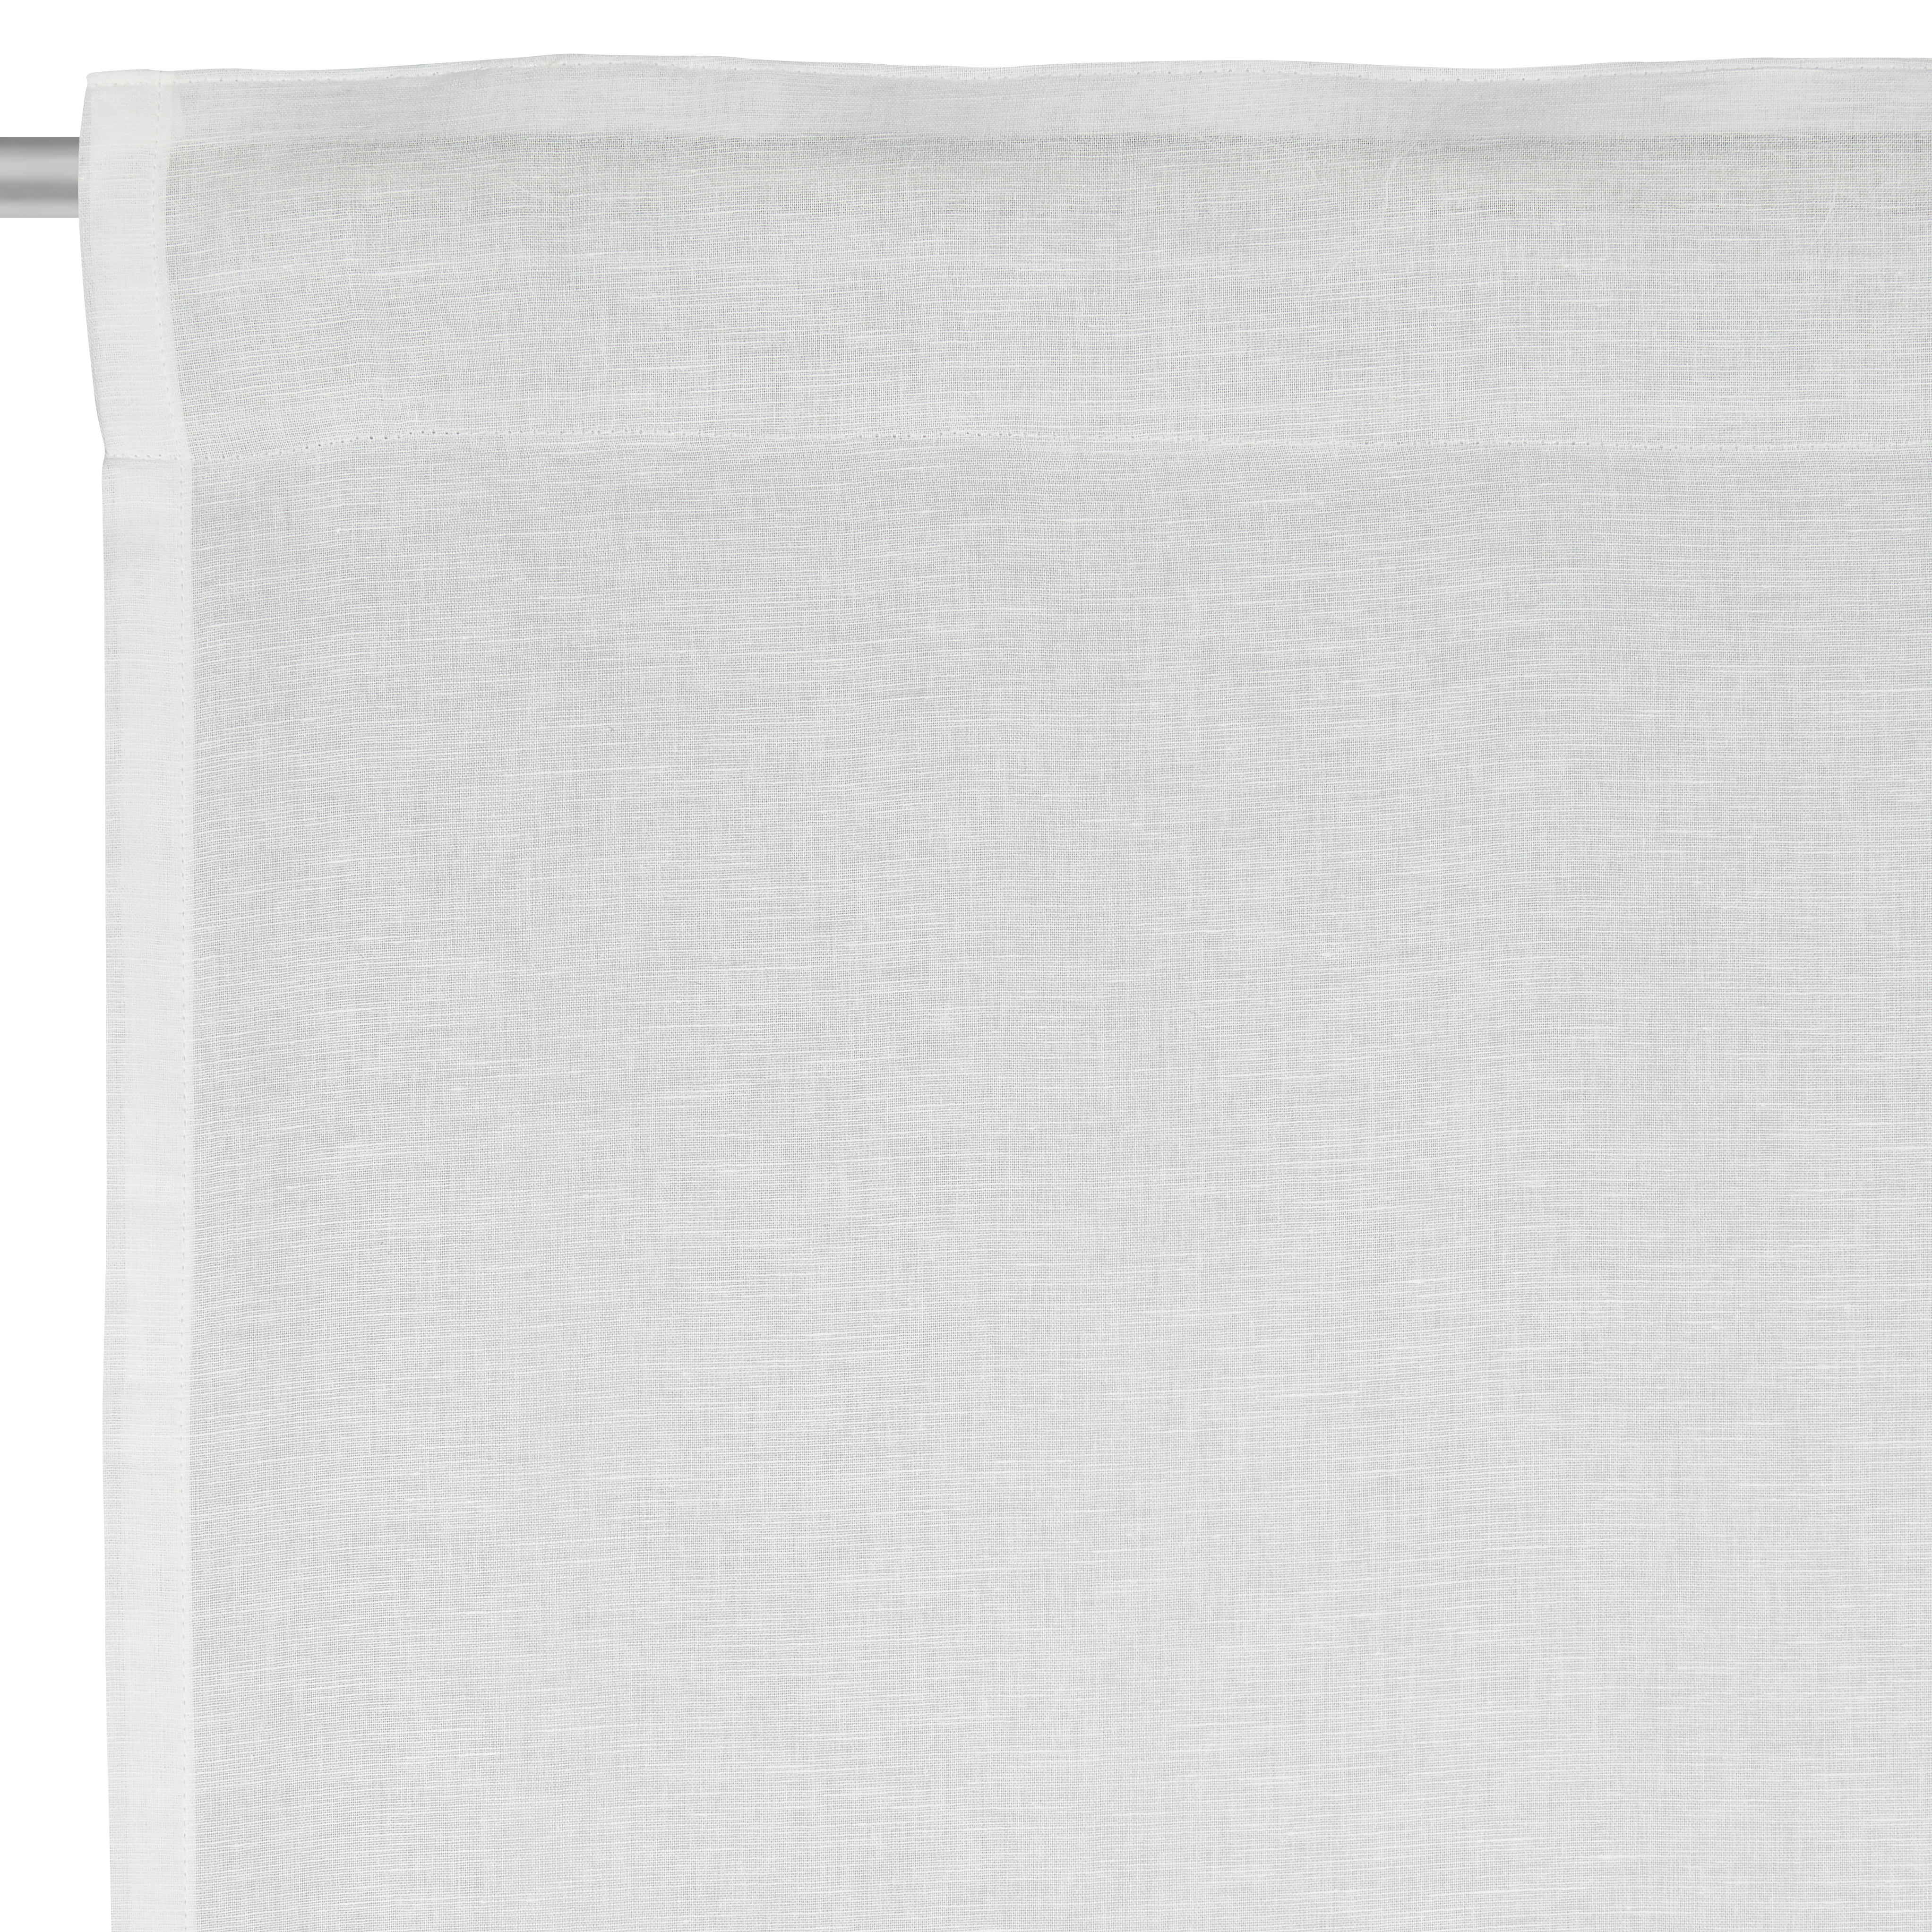 FERTIGVORHANG ORGANIC halbtransparent 140/255 cm   - Weiß, LIFESTYLE, Textil (140/255cm) - Bio:Vio